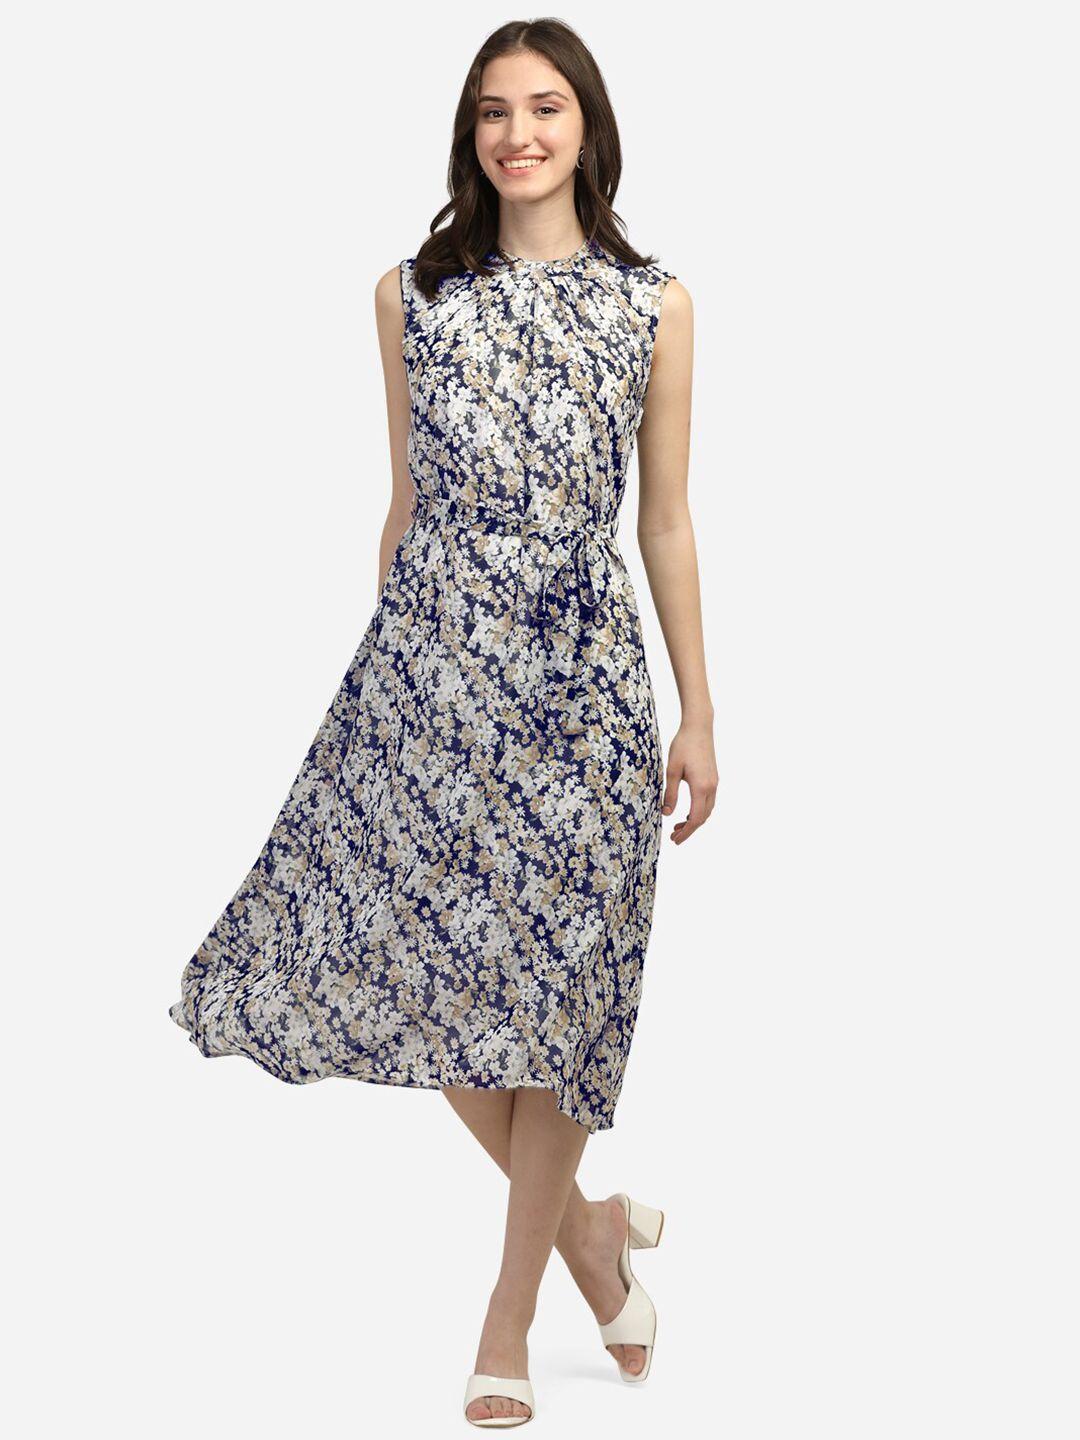 fbella women navy blue & white floral georgette a-line dress